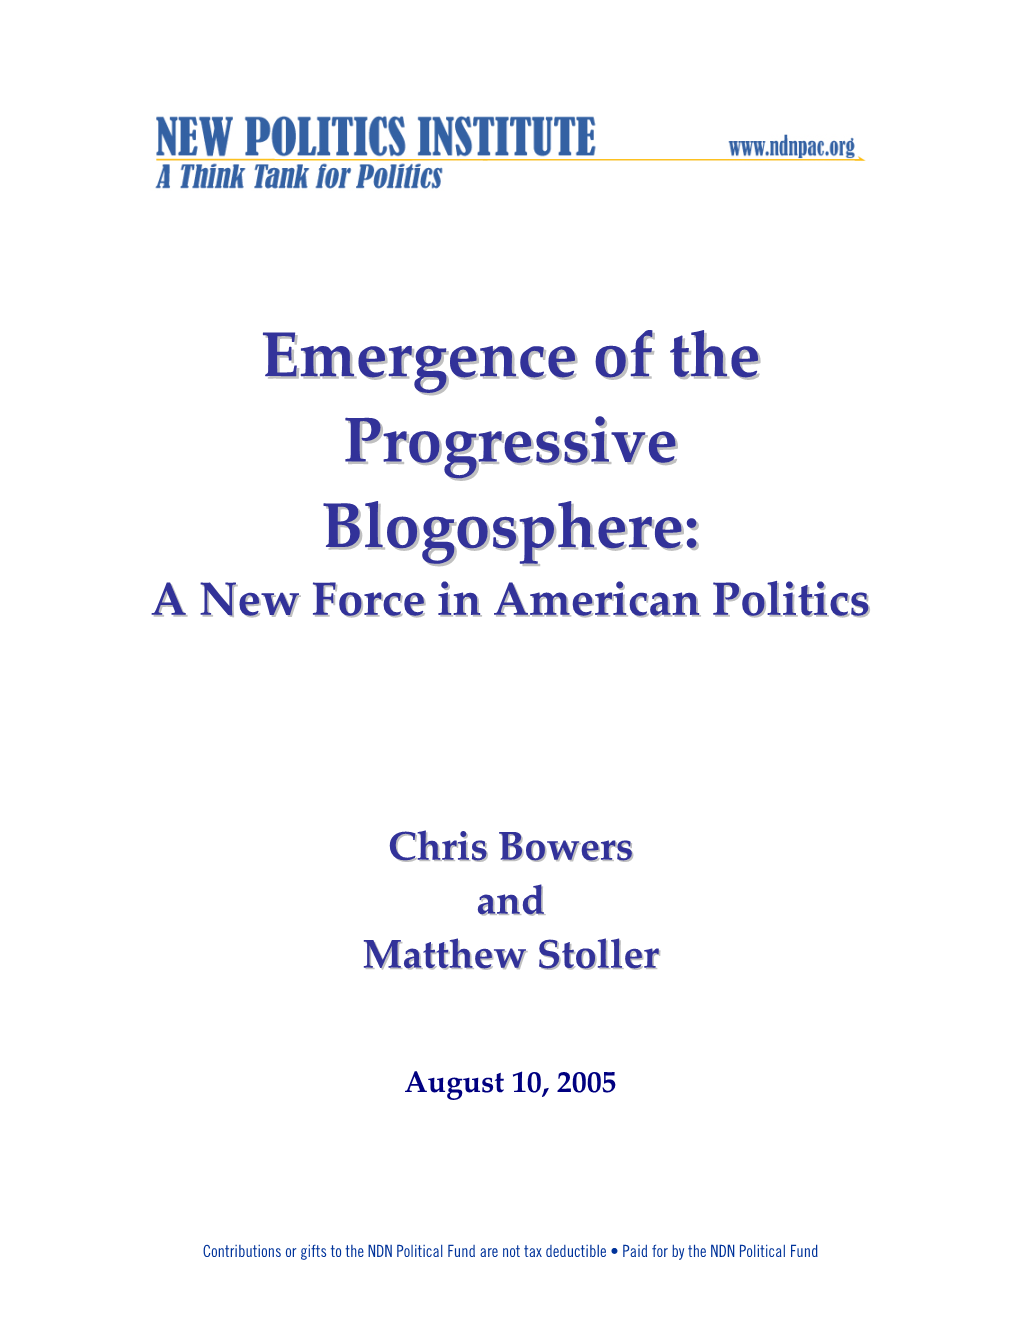 Emergence of the Progressive Blogosphere